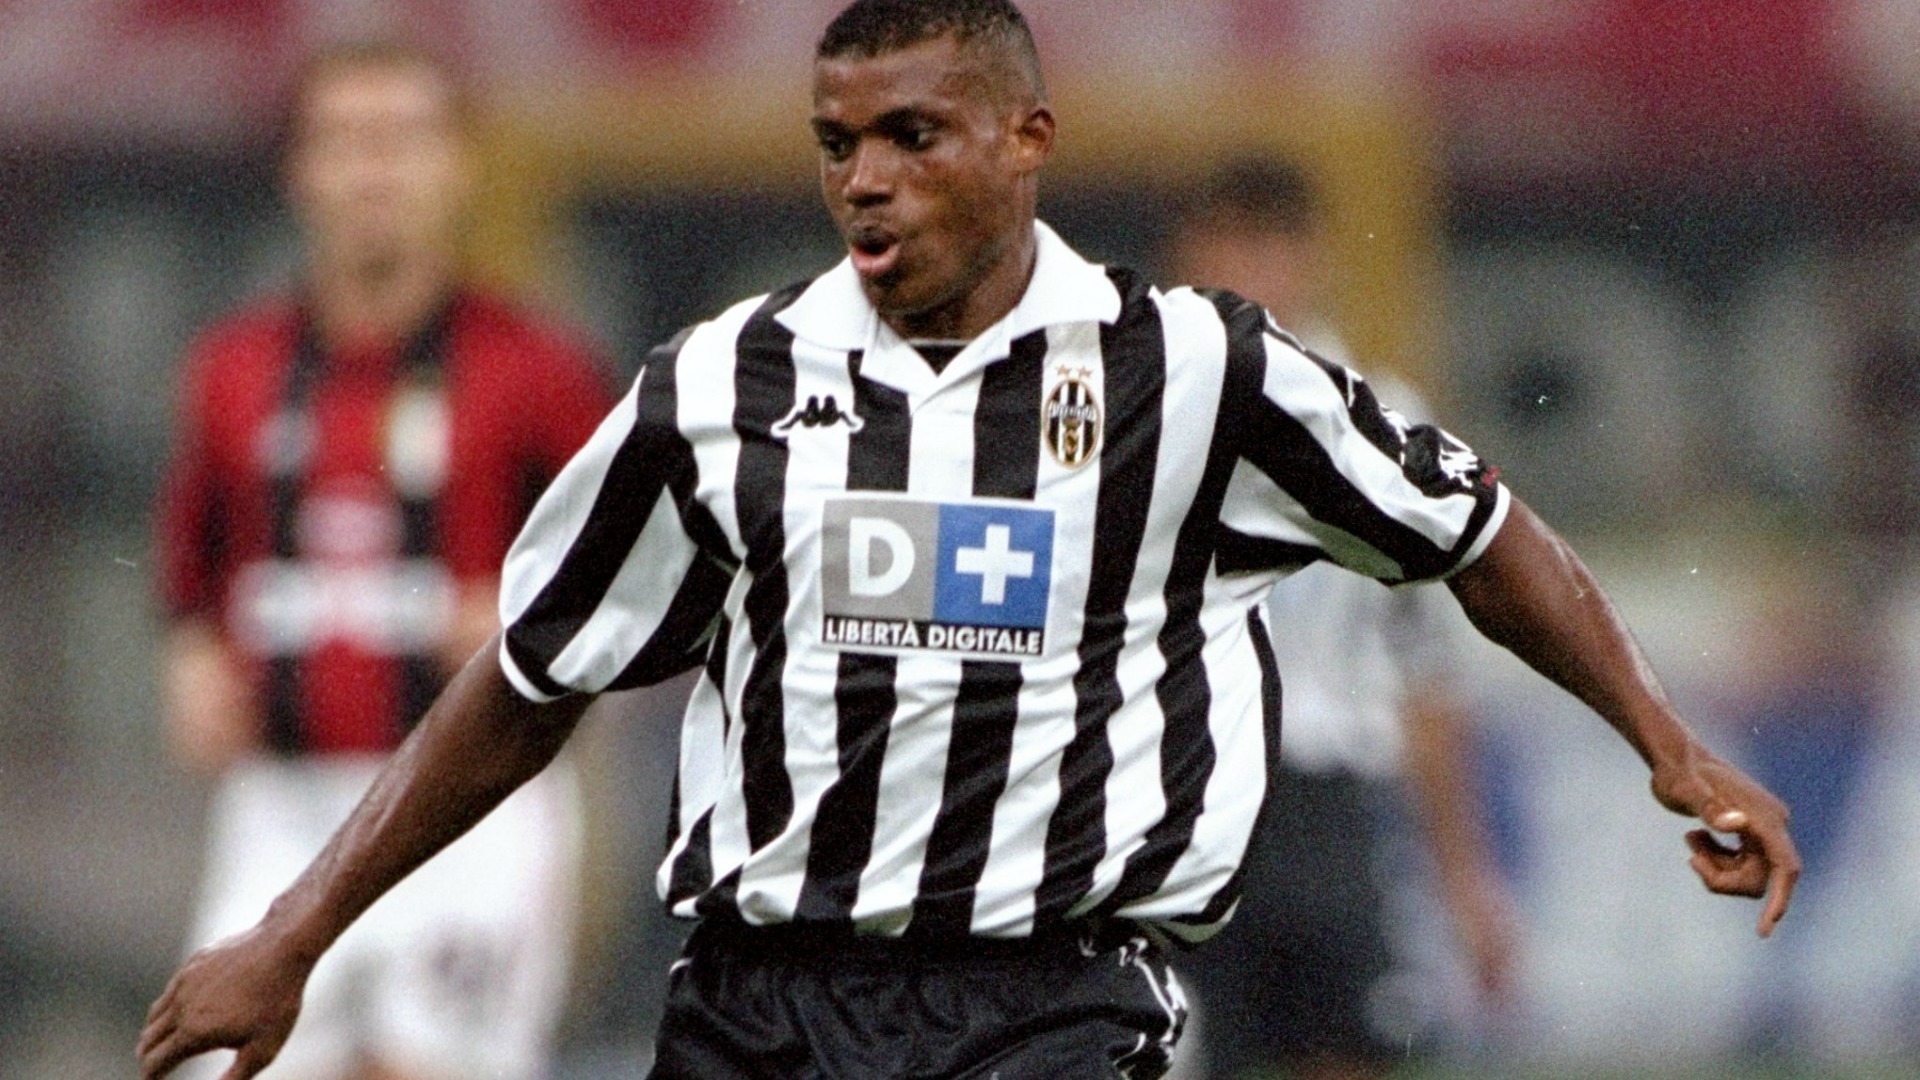 Sunday Oliseh Juventus 1999 - Goal.com1920 x 1080